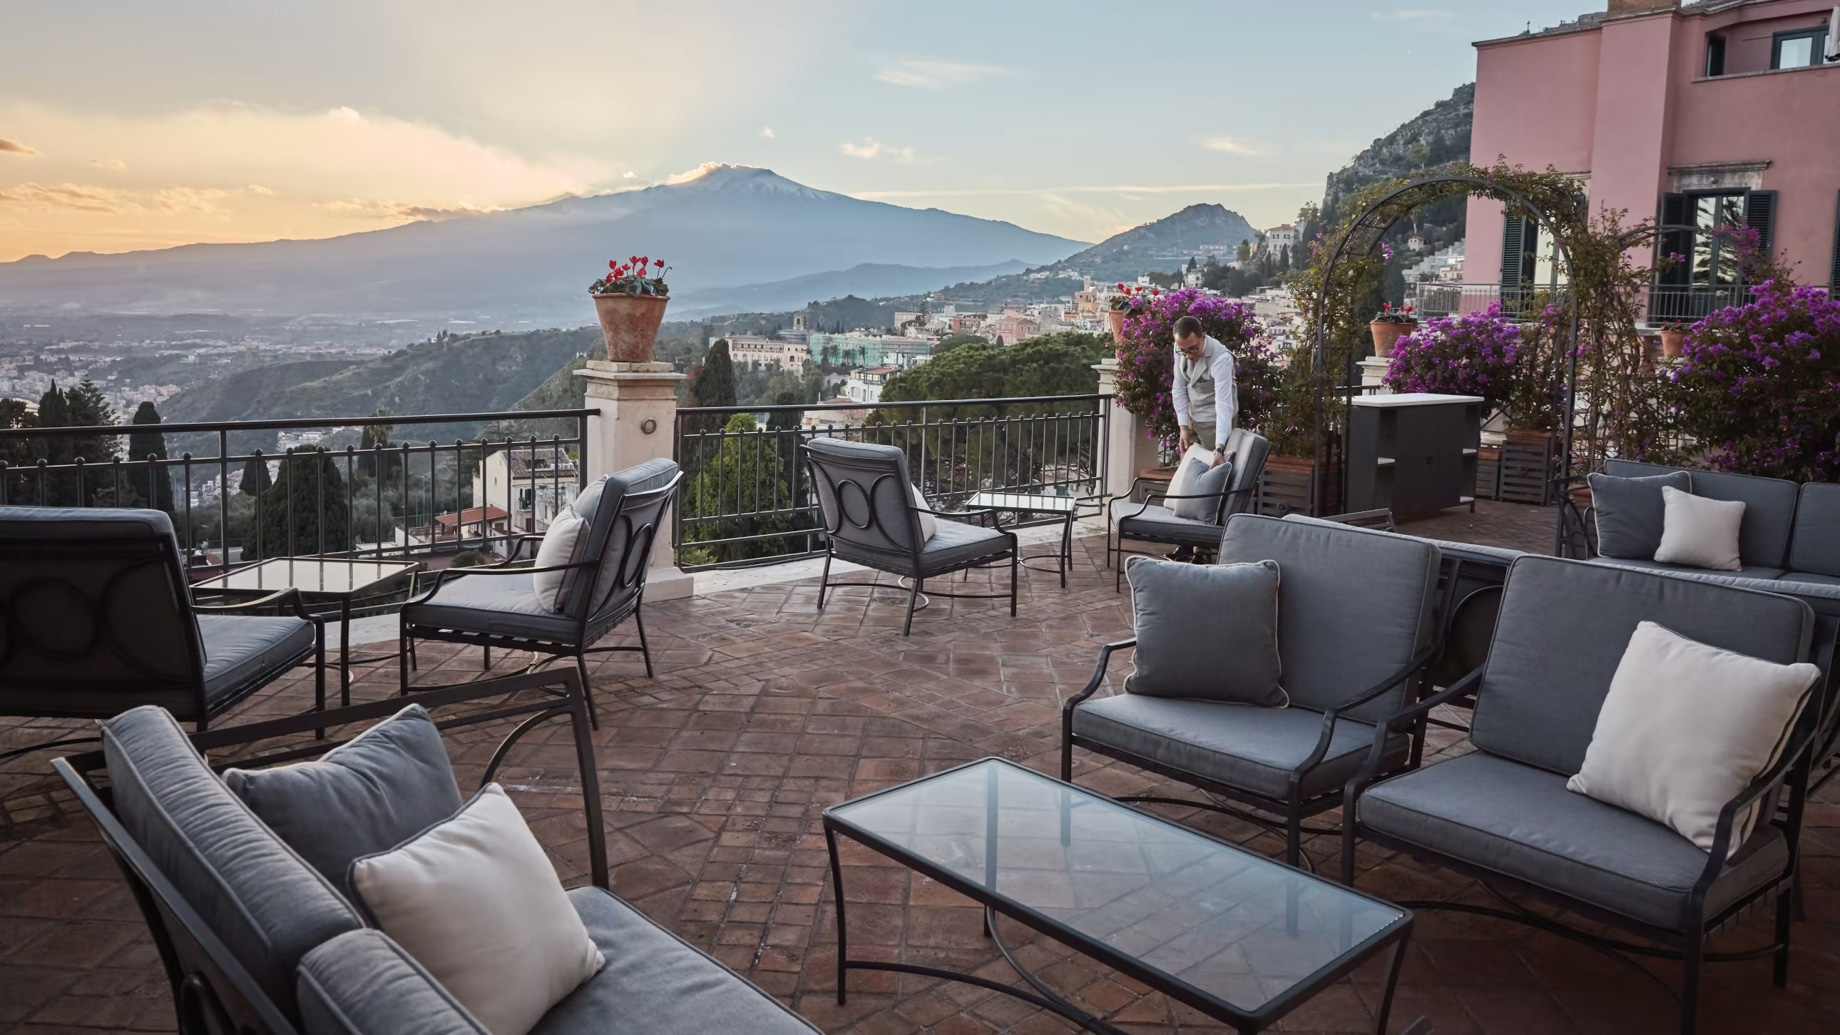 187 – Grand Hotel Timeo, A Belmond Hotel – Taormina, Italy